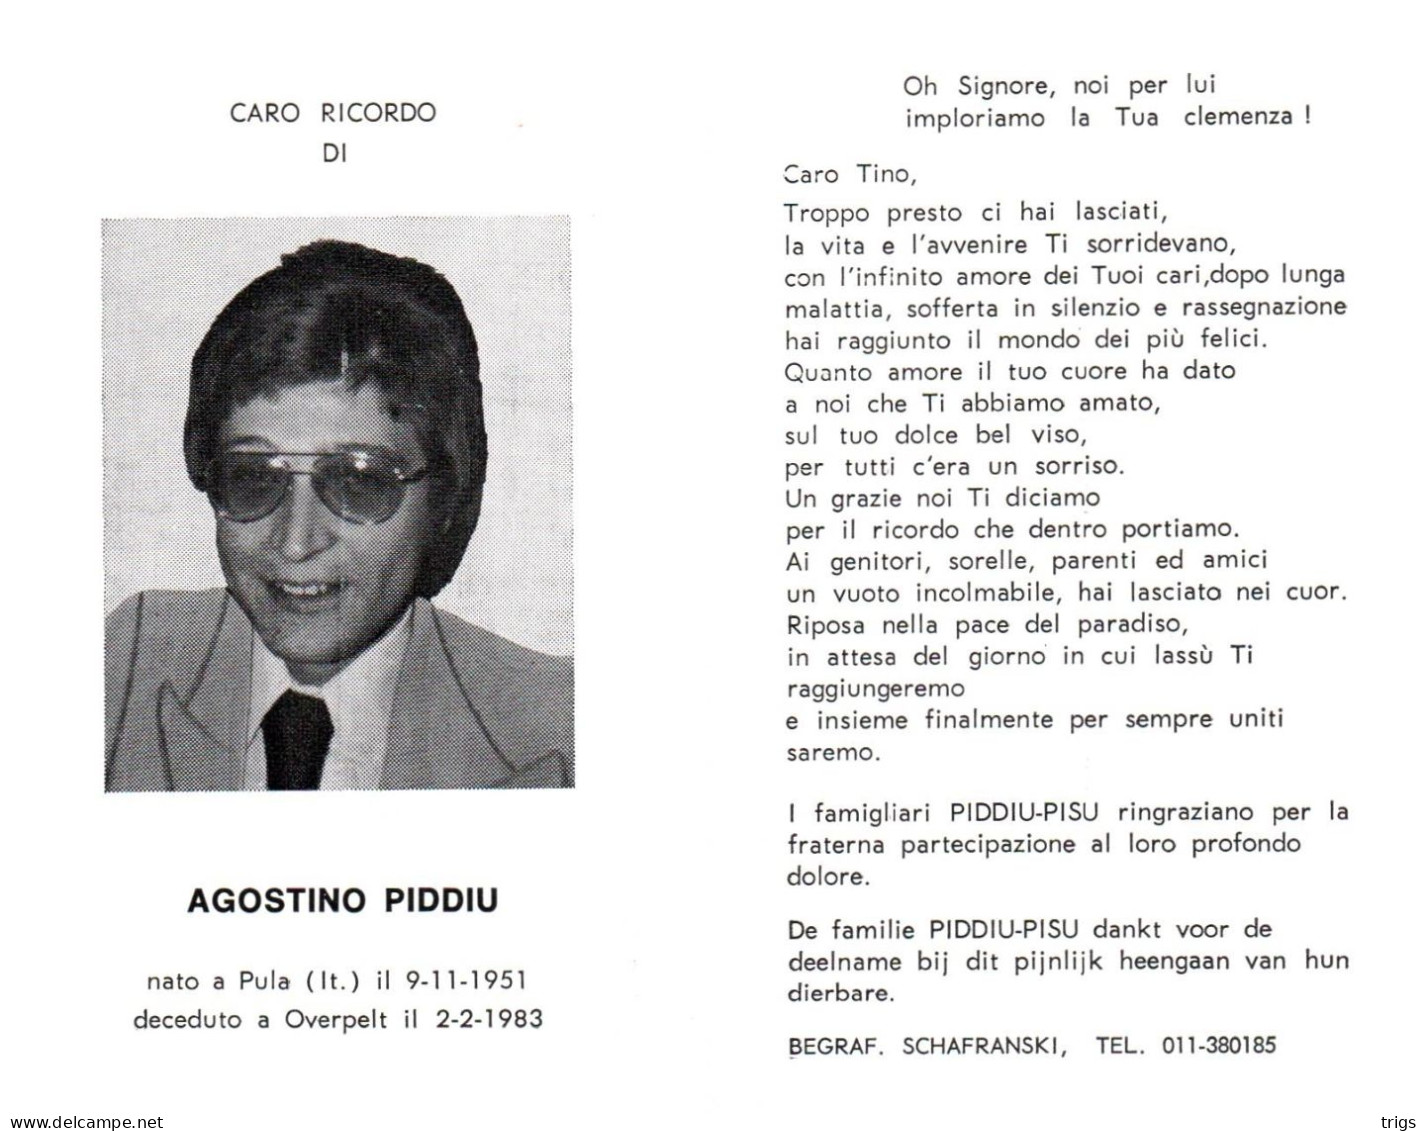 Agostino Piddiu (1951-1983) - Devotion Images